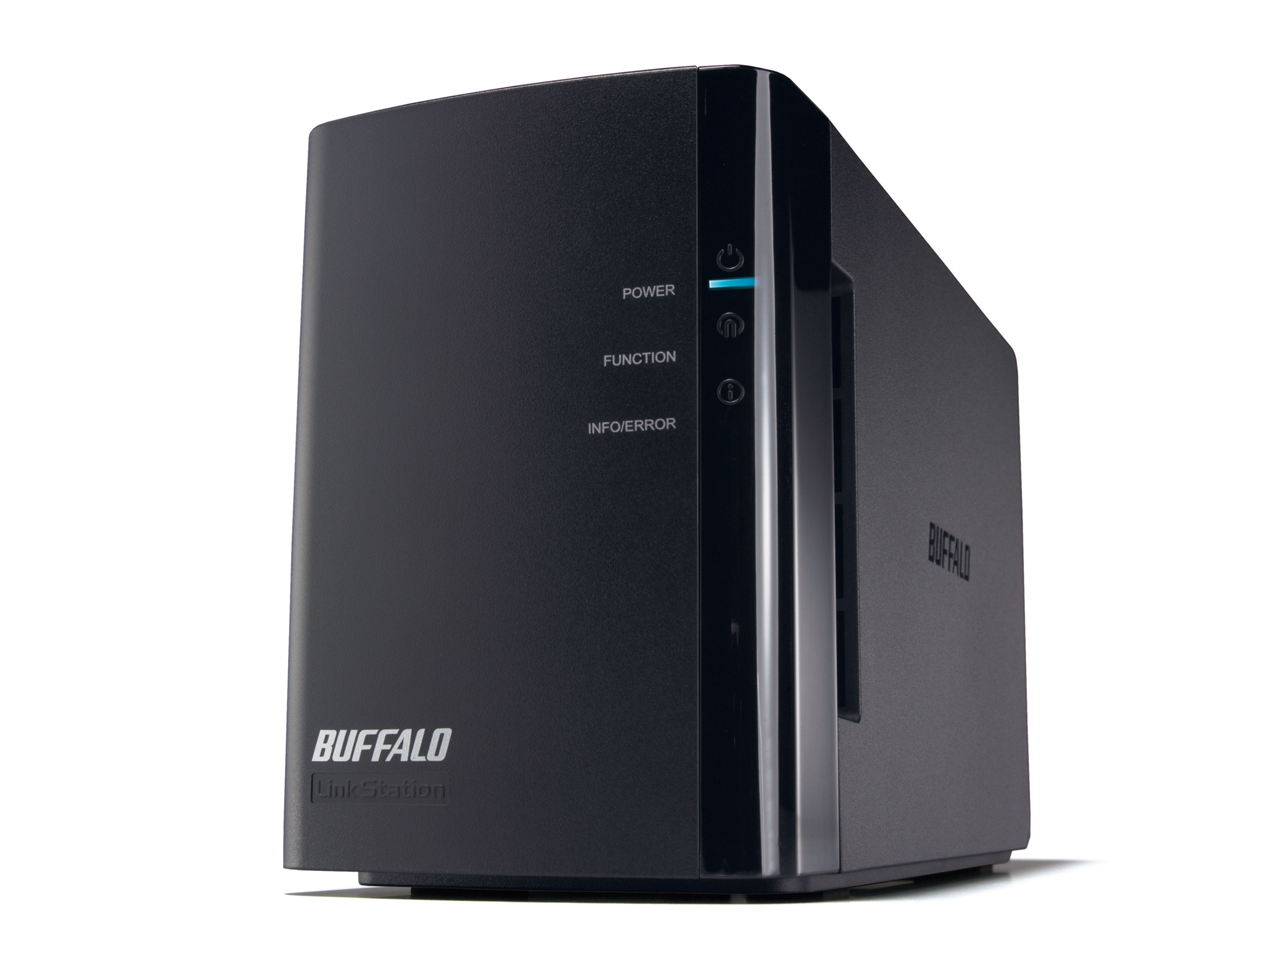 Buffalo hard drive drivers download